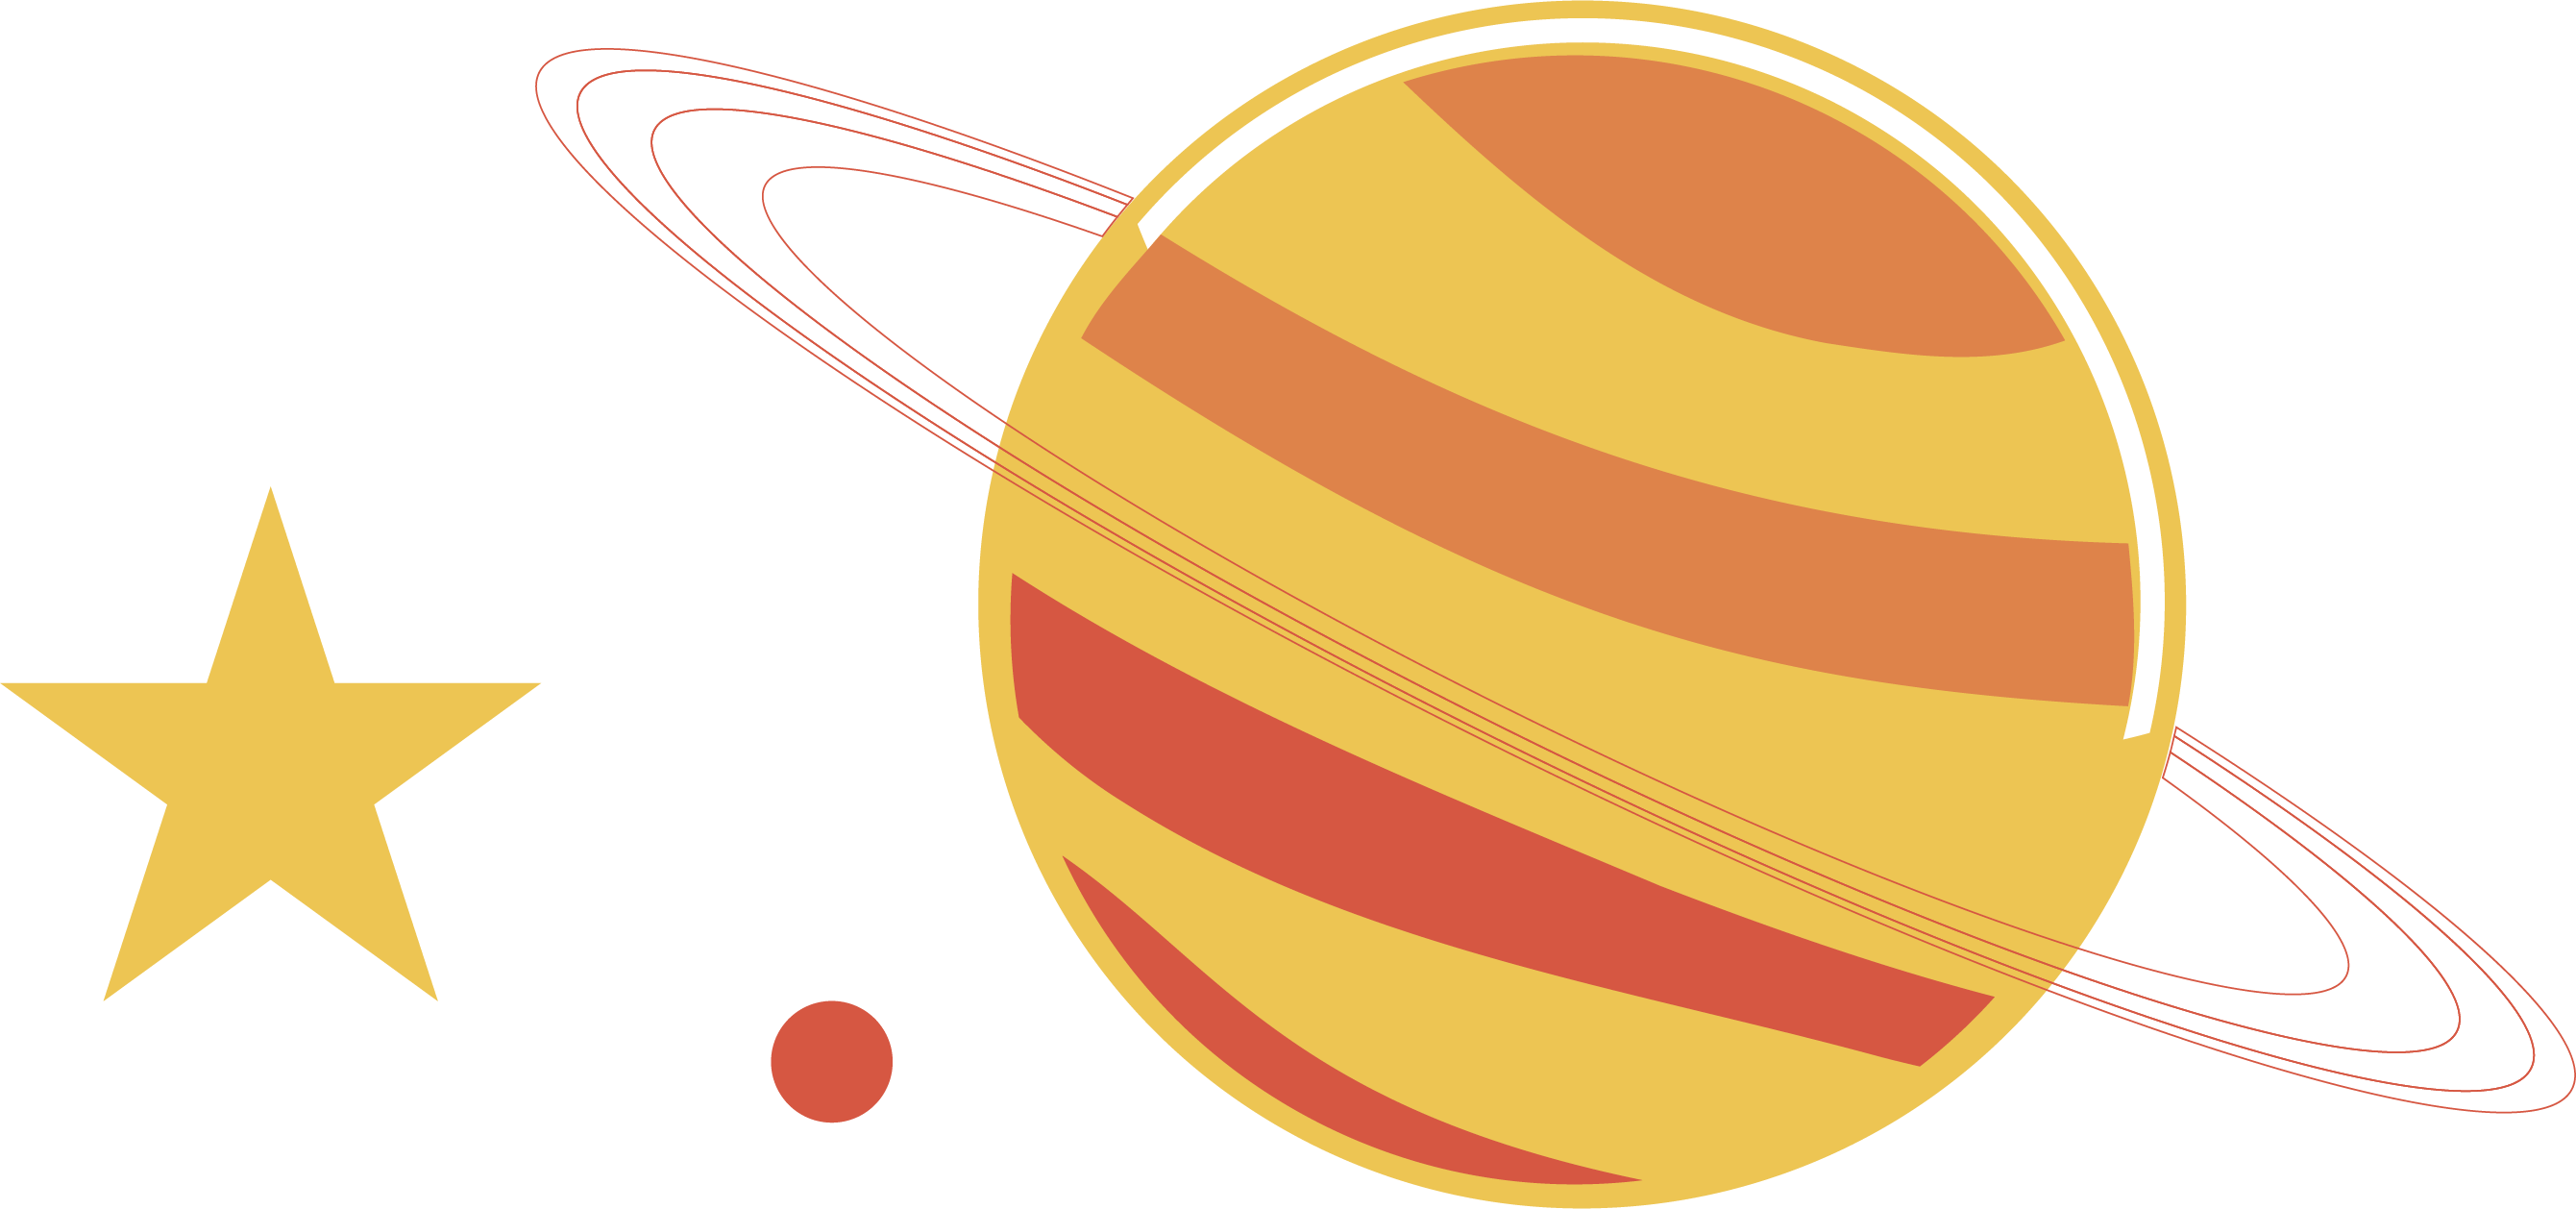 Planet Cartoon - Star Planet - Star And Planet Cartoon (2681x1258)